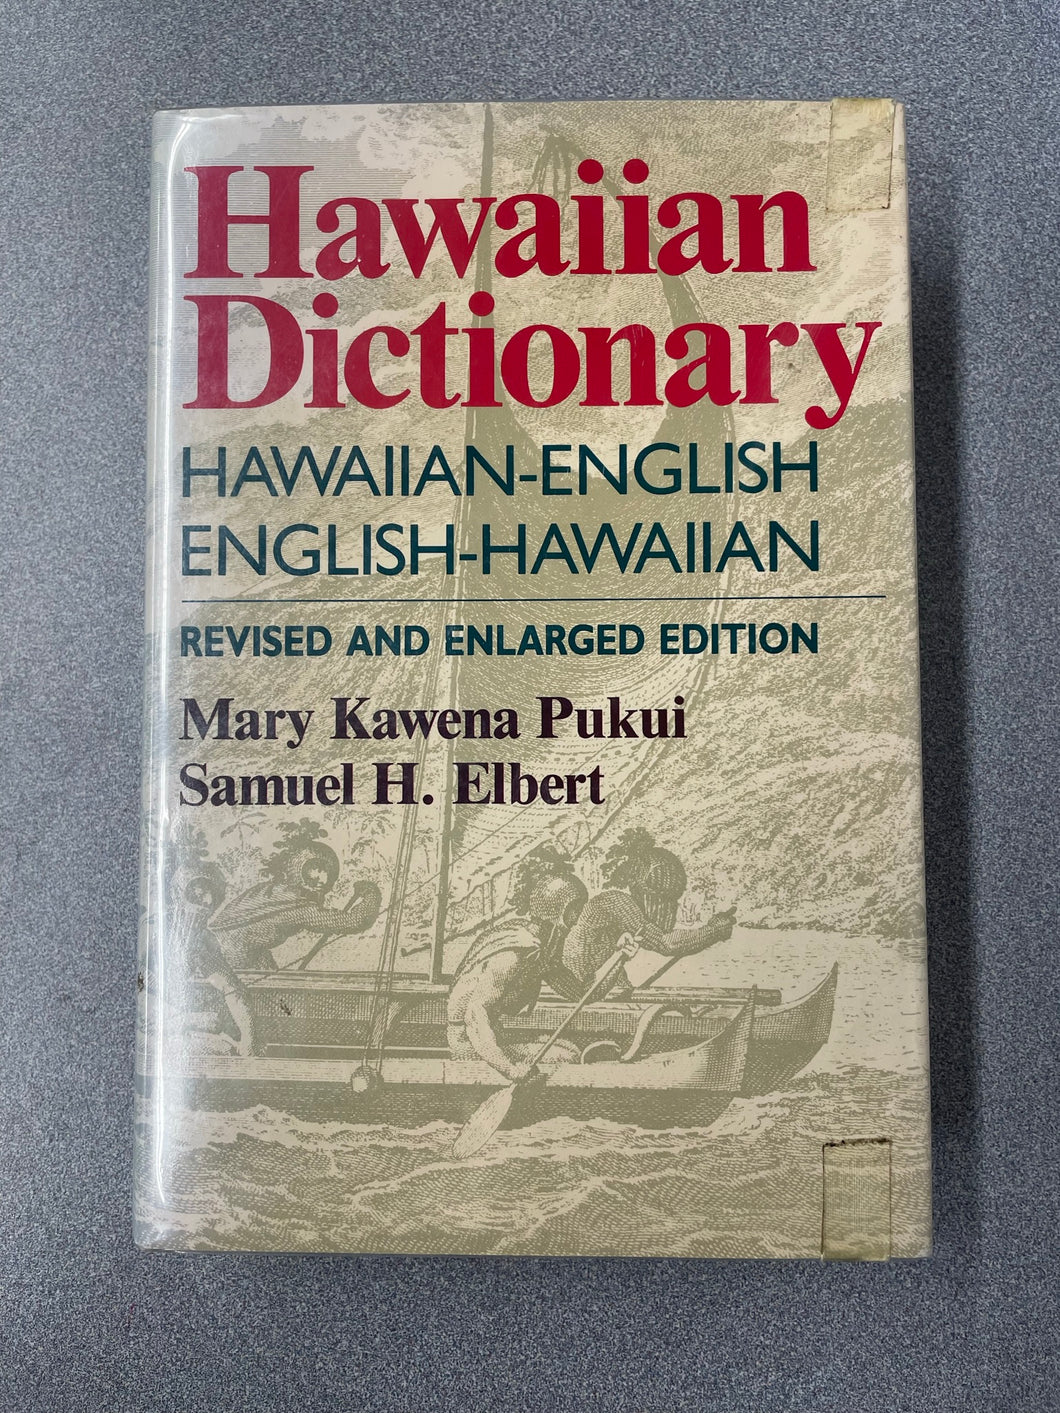 Hawaiian Dicitonary: Hawaiian-English English-Hawaiian: Revised and Enlarged Edition, Pukui, Mary Kawena and Samuel Hl. Elbert [1986] REF 6/23